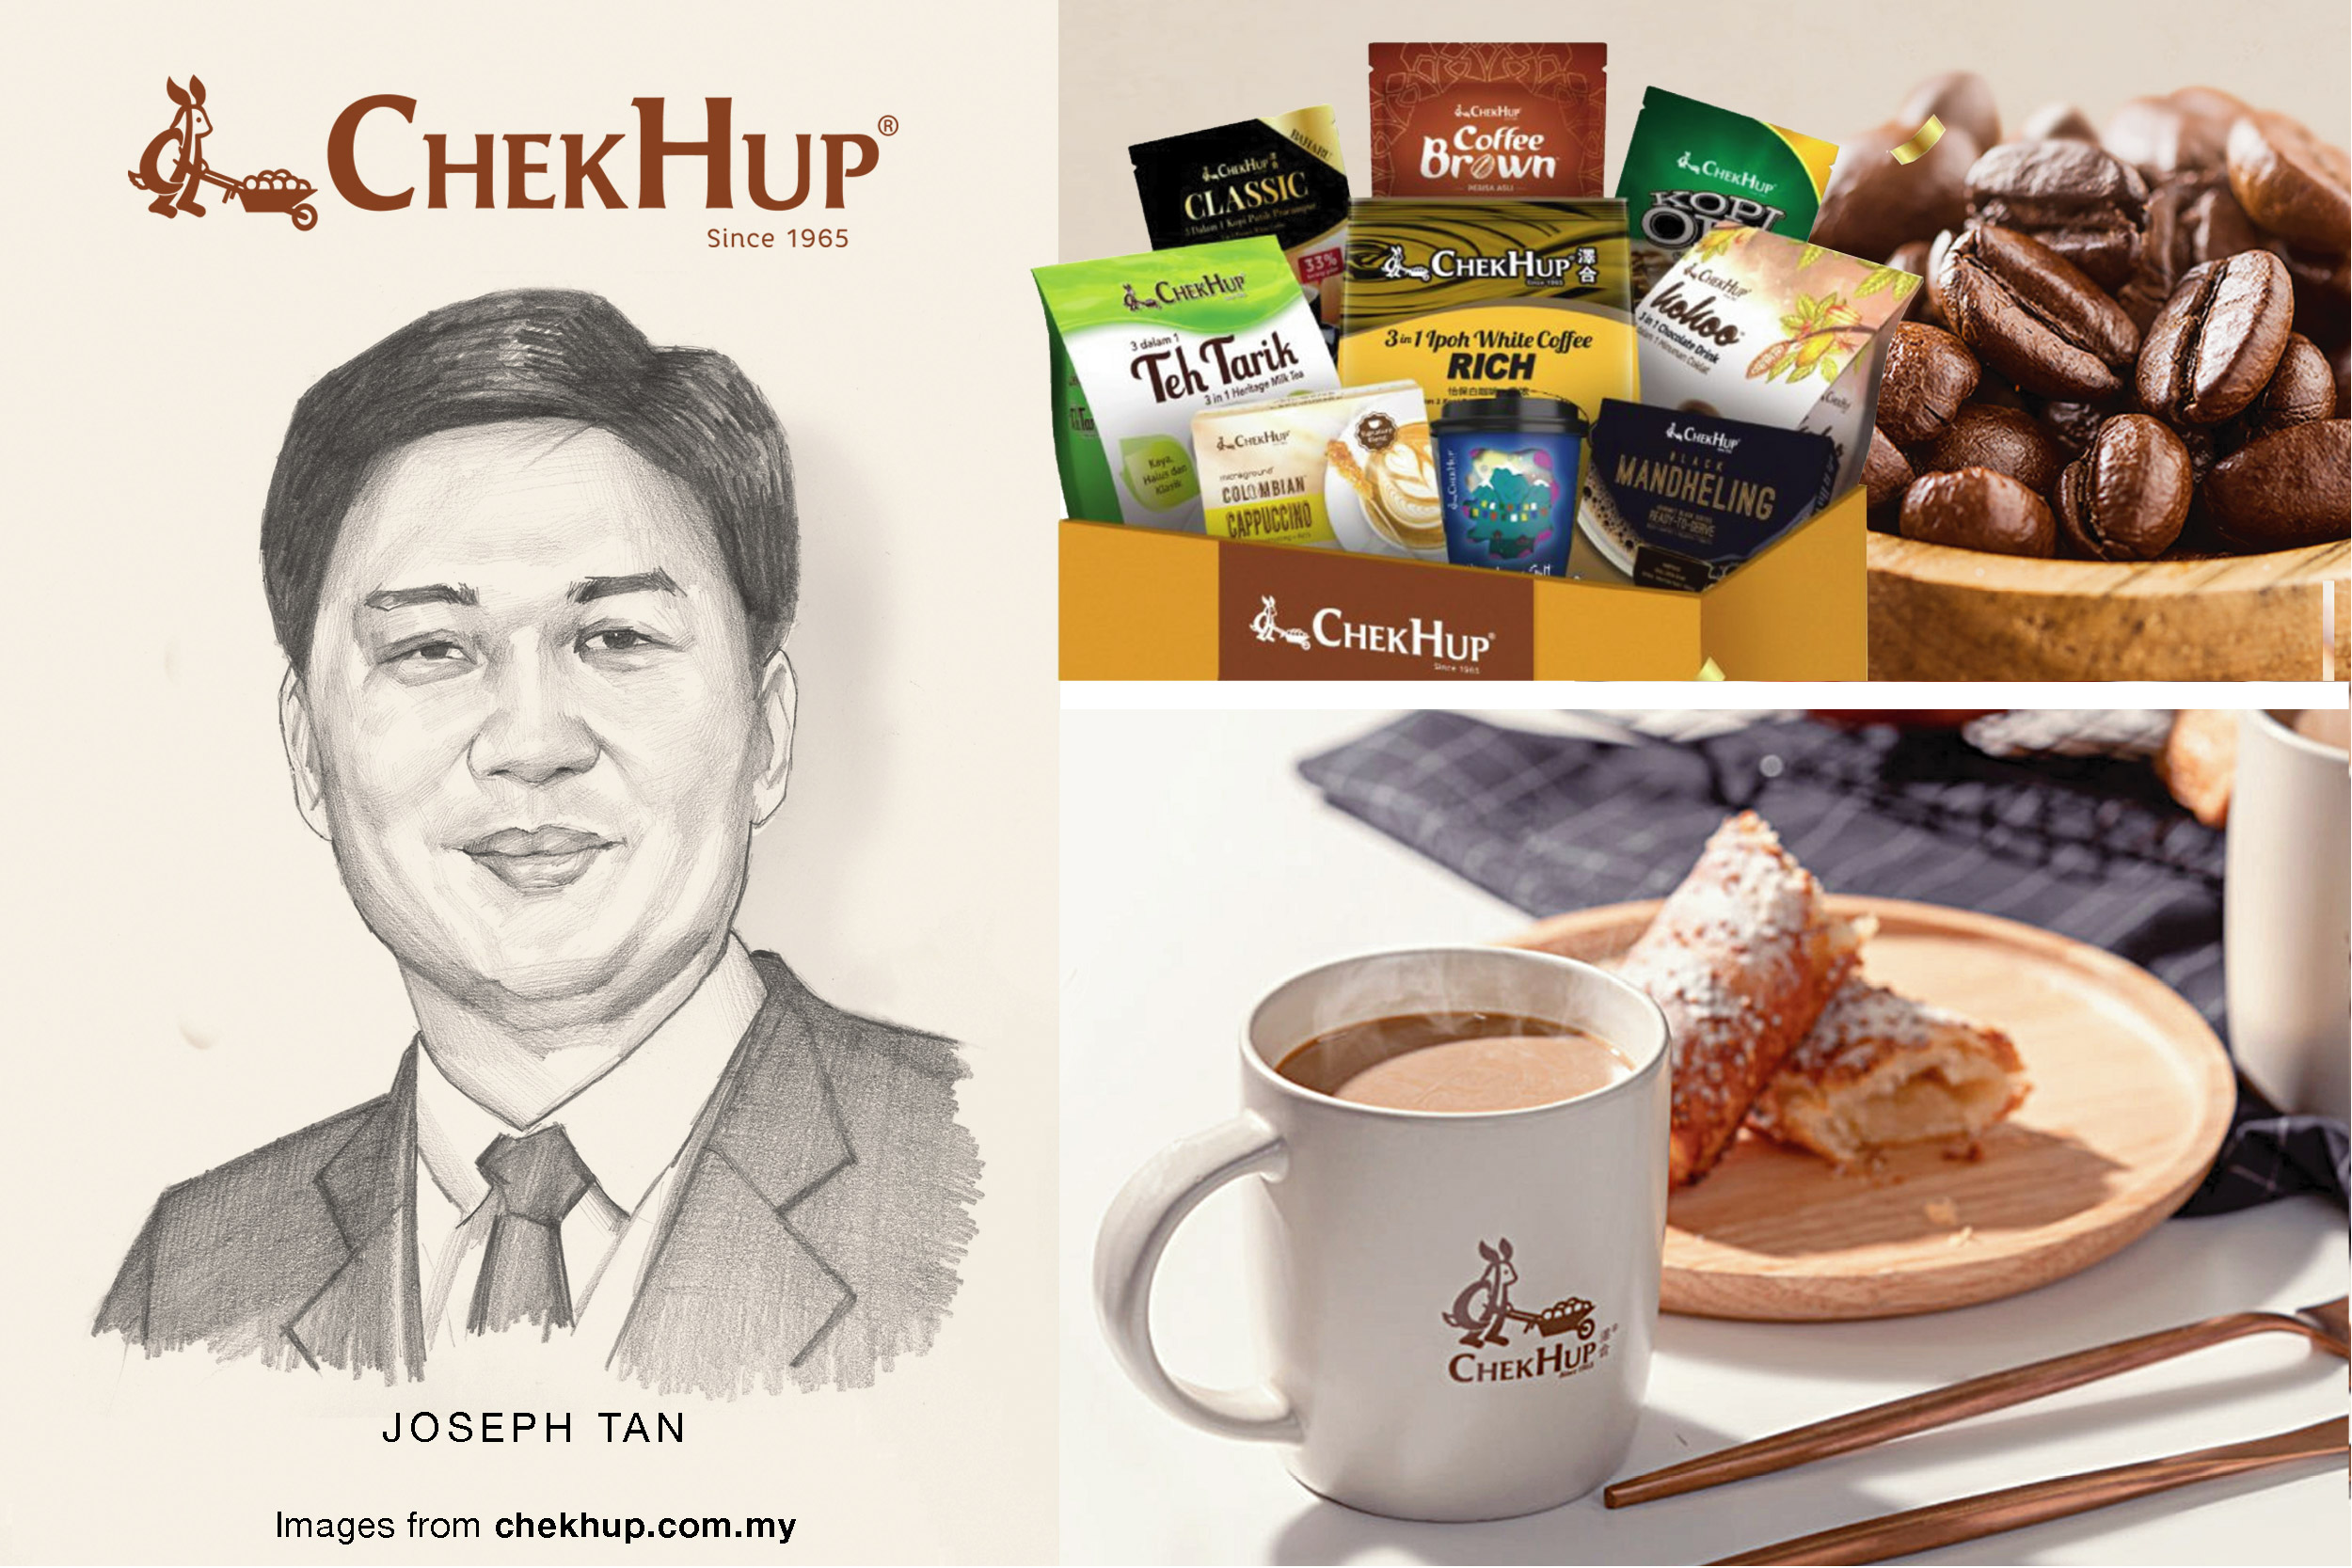 Joseph Tan, 2nd Gen at Chek Hup drives family brand forward 